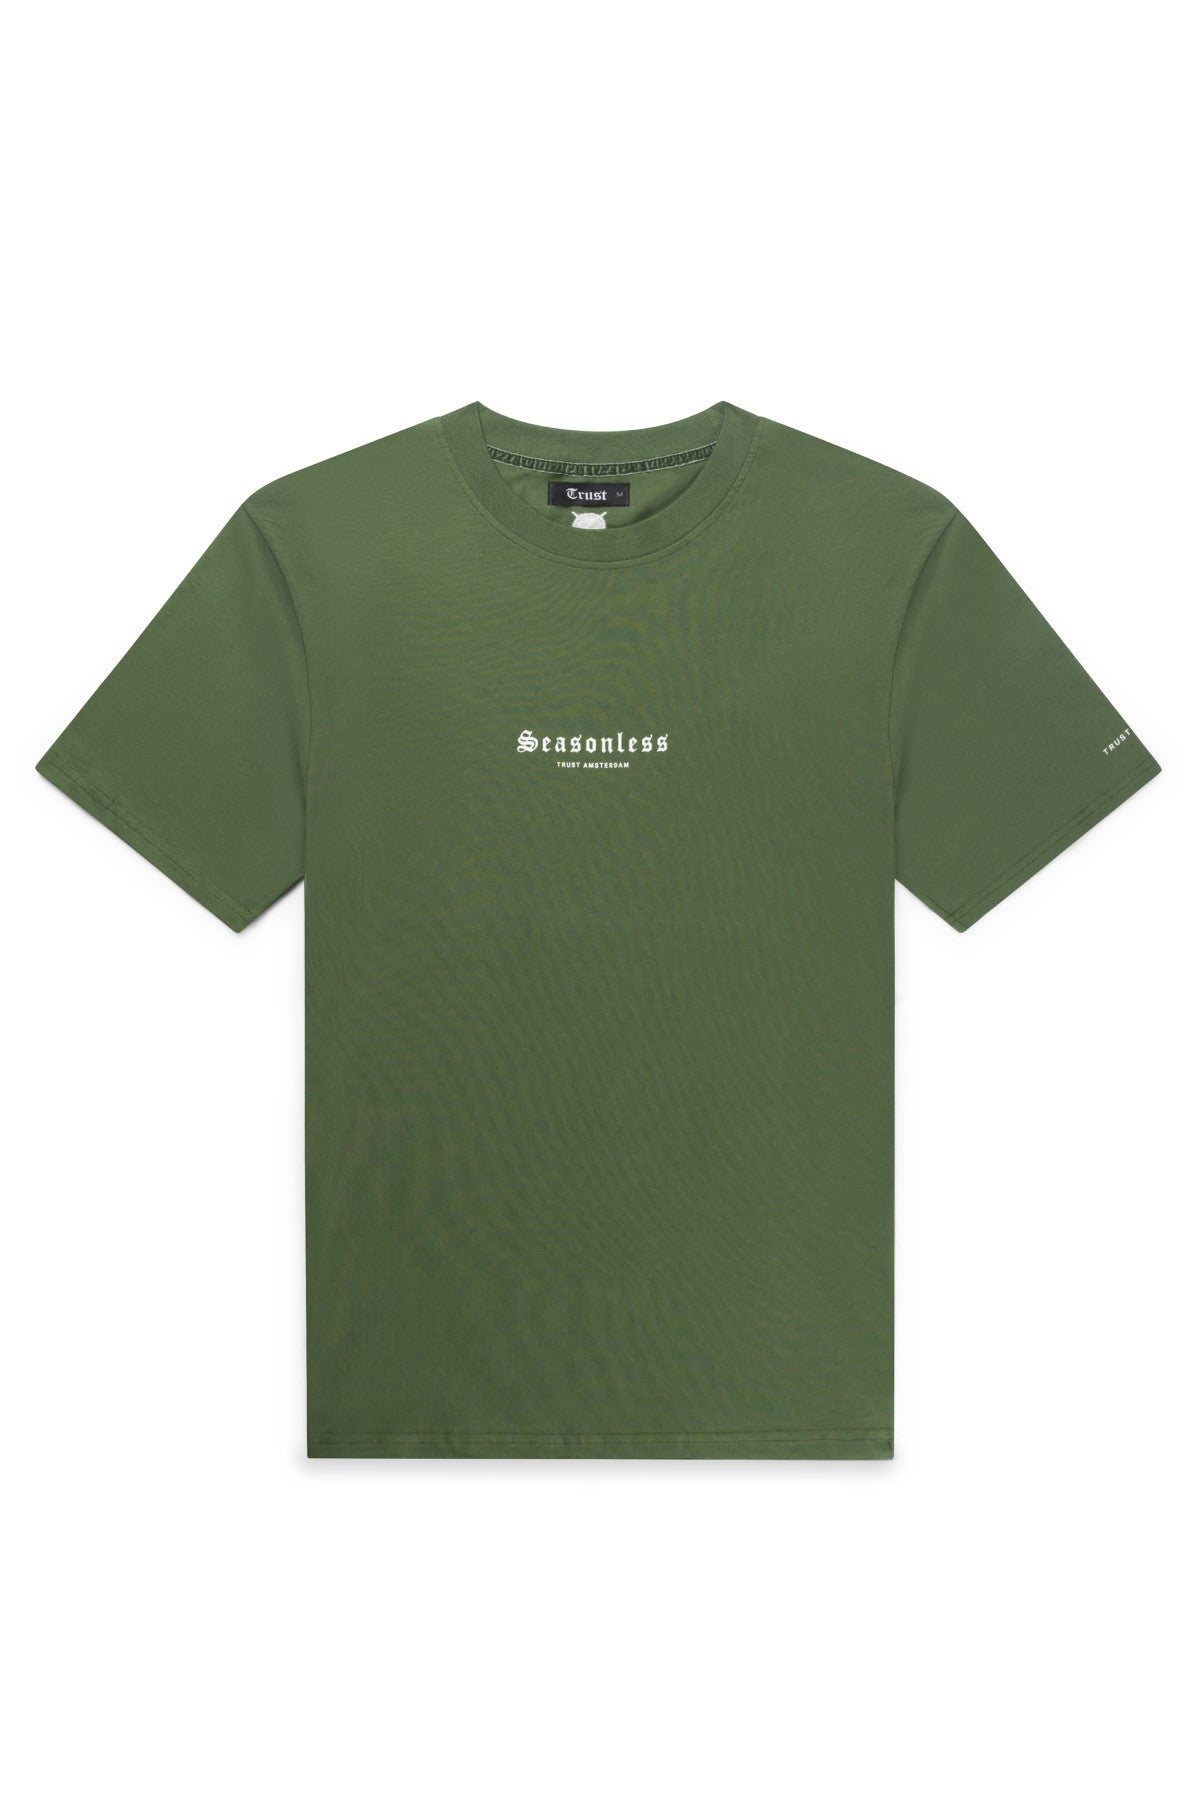 Seasonless T-Shirt - Army Green